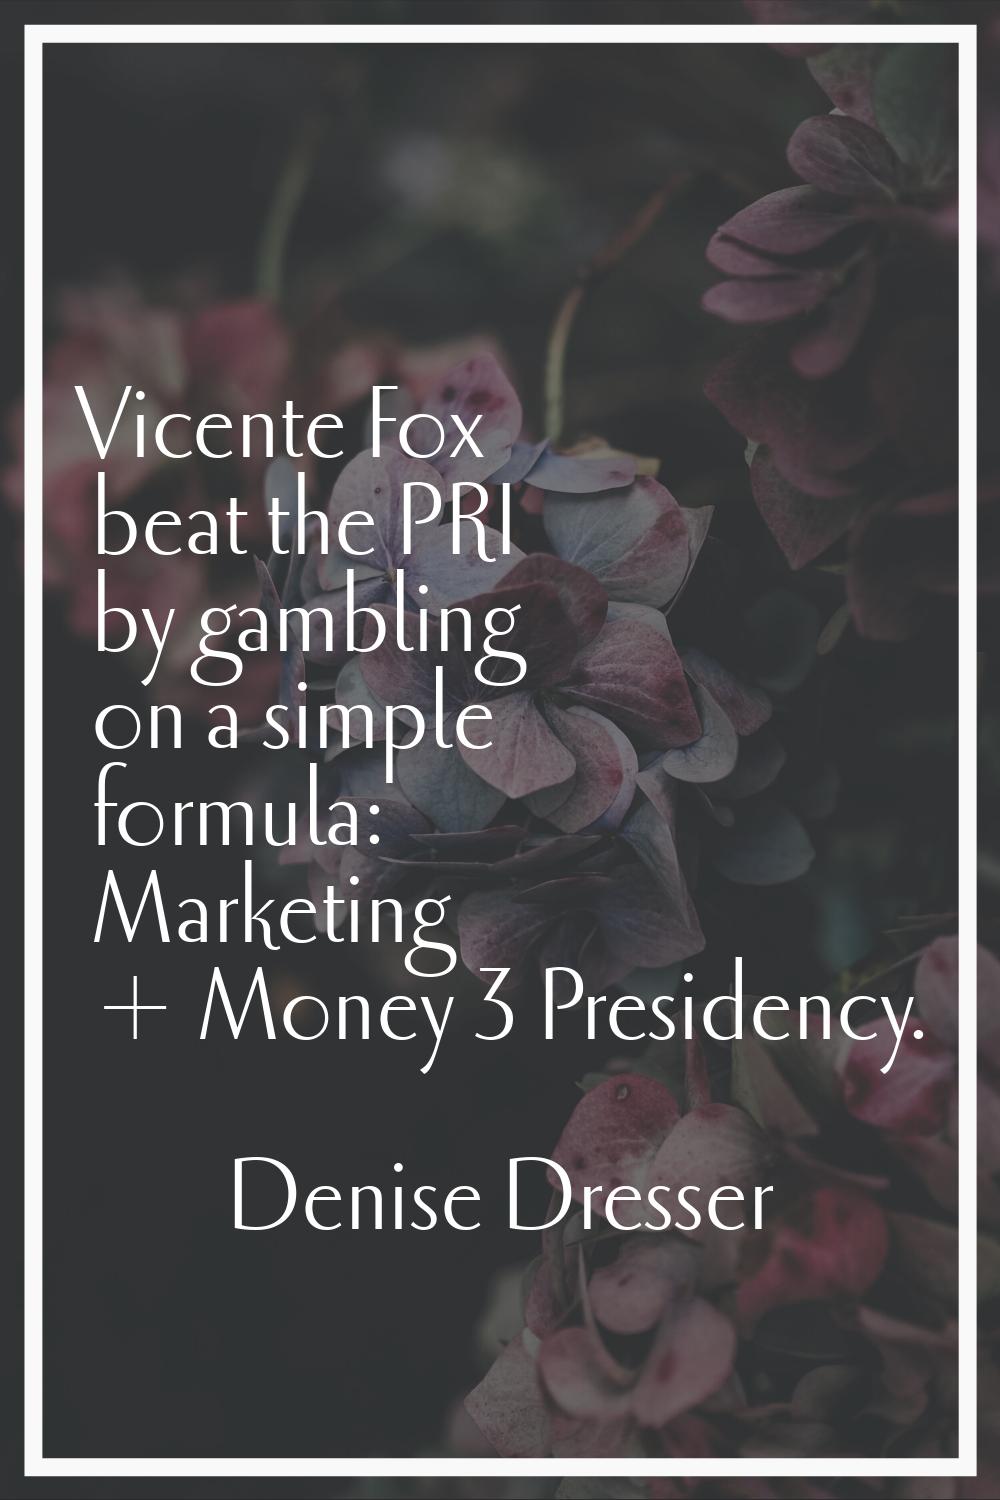 Vicente Fox beat the PRI by gambling on a simple formula: Marketing + Money = Presidency.